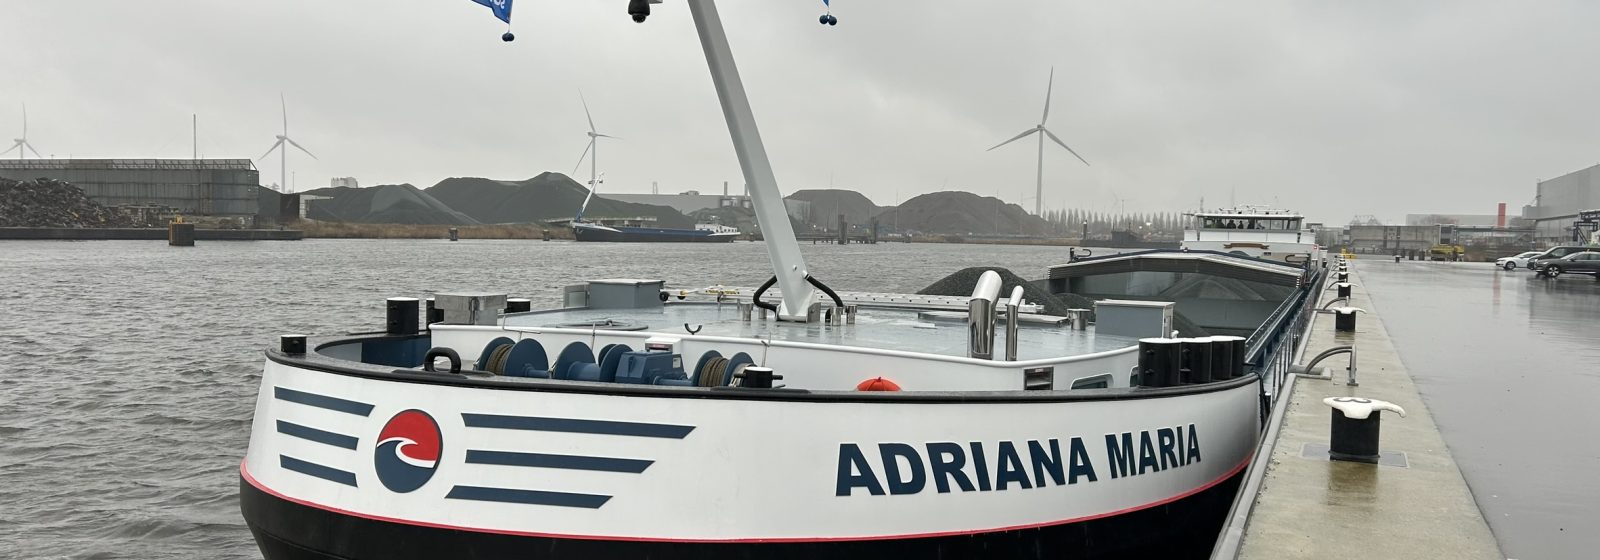 'Adriana Maria' van Amer Shipping